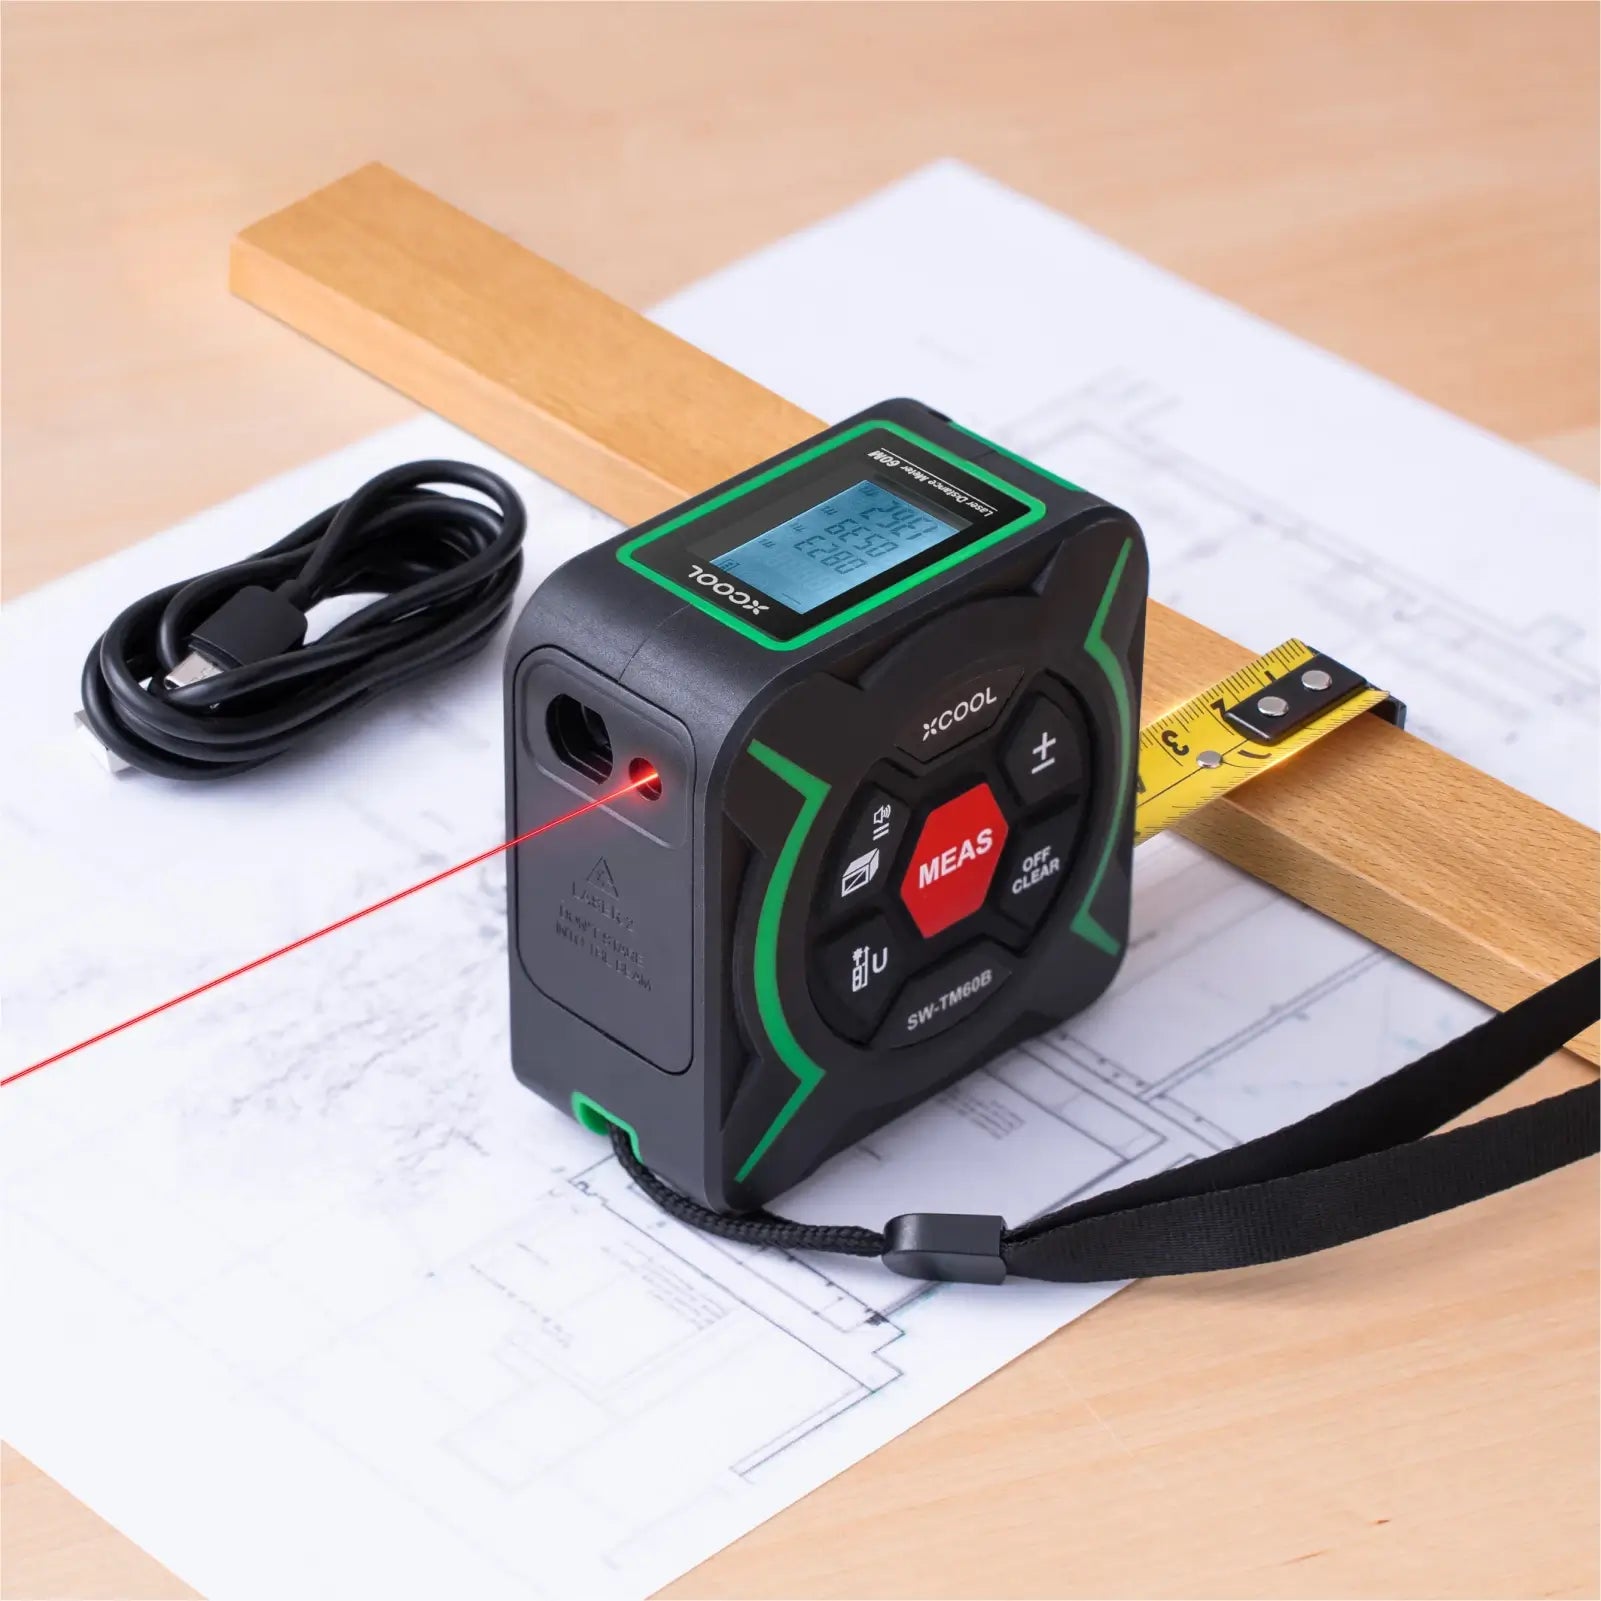 xCool 2-in-1 Digital Laser & Tape Measure, Handyman & Construction Tool